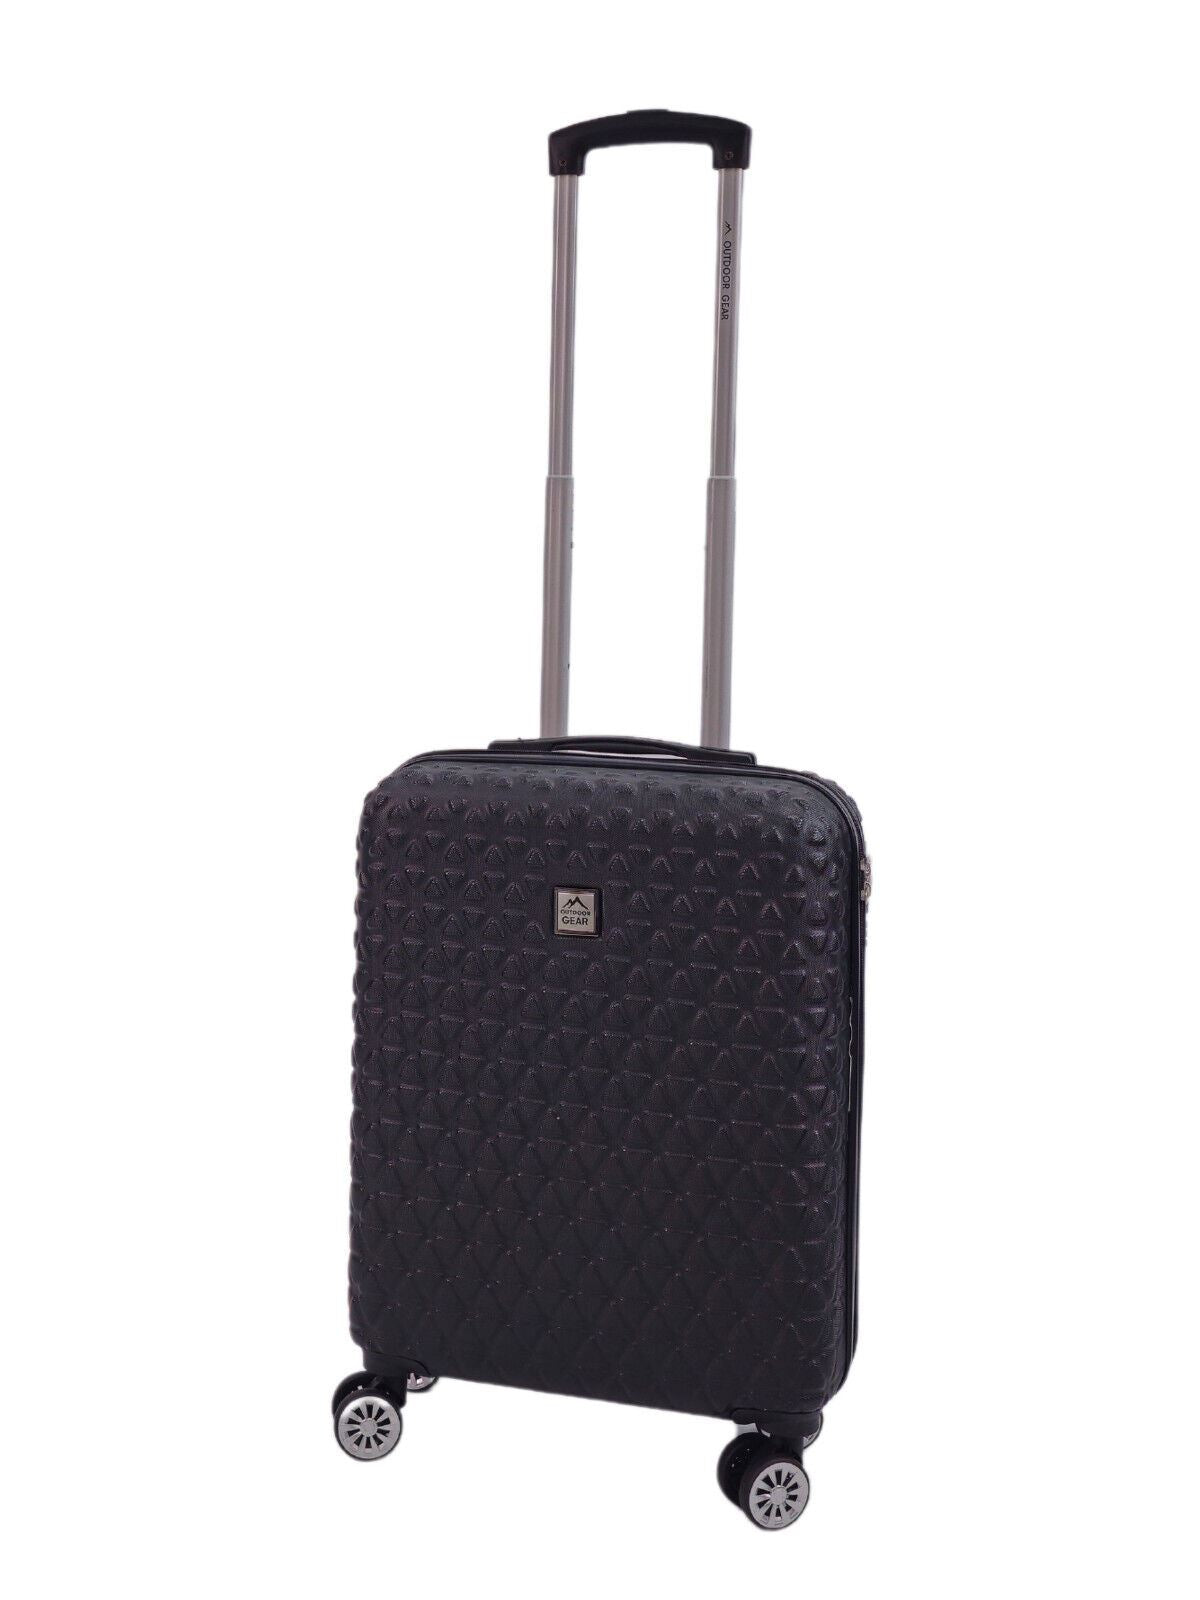 Hardshell Suitcase Robust 8 Wheel Lightweight Luggage Cabin Case Bag